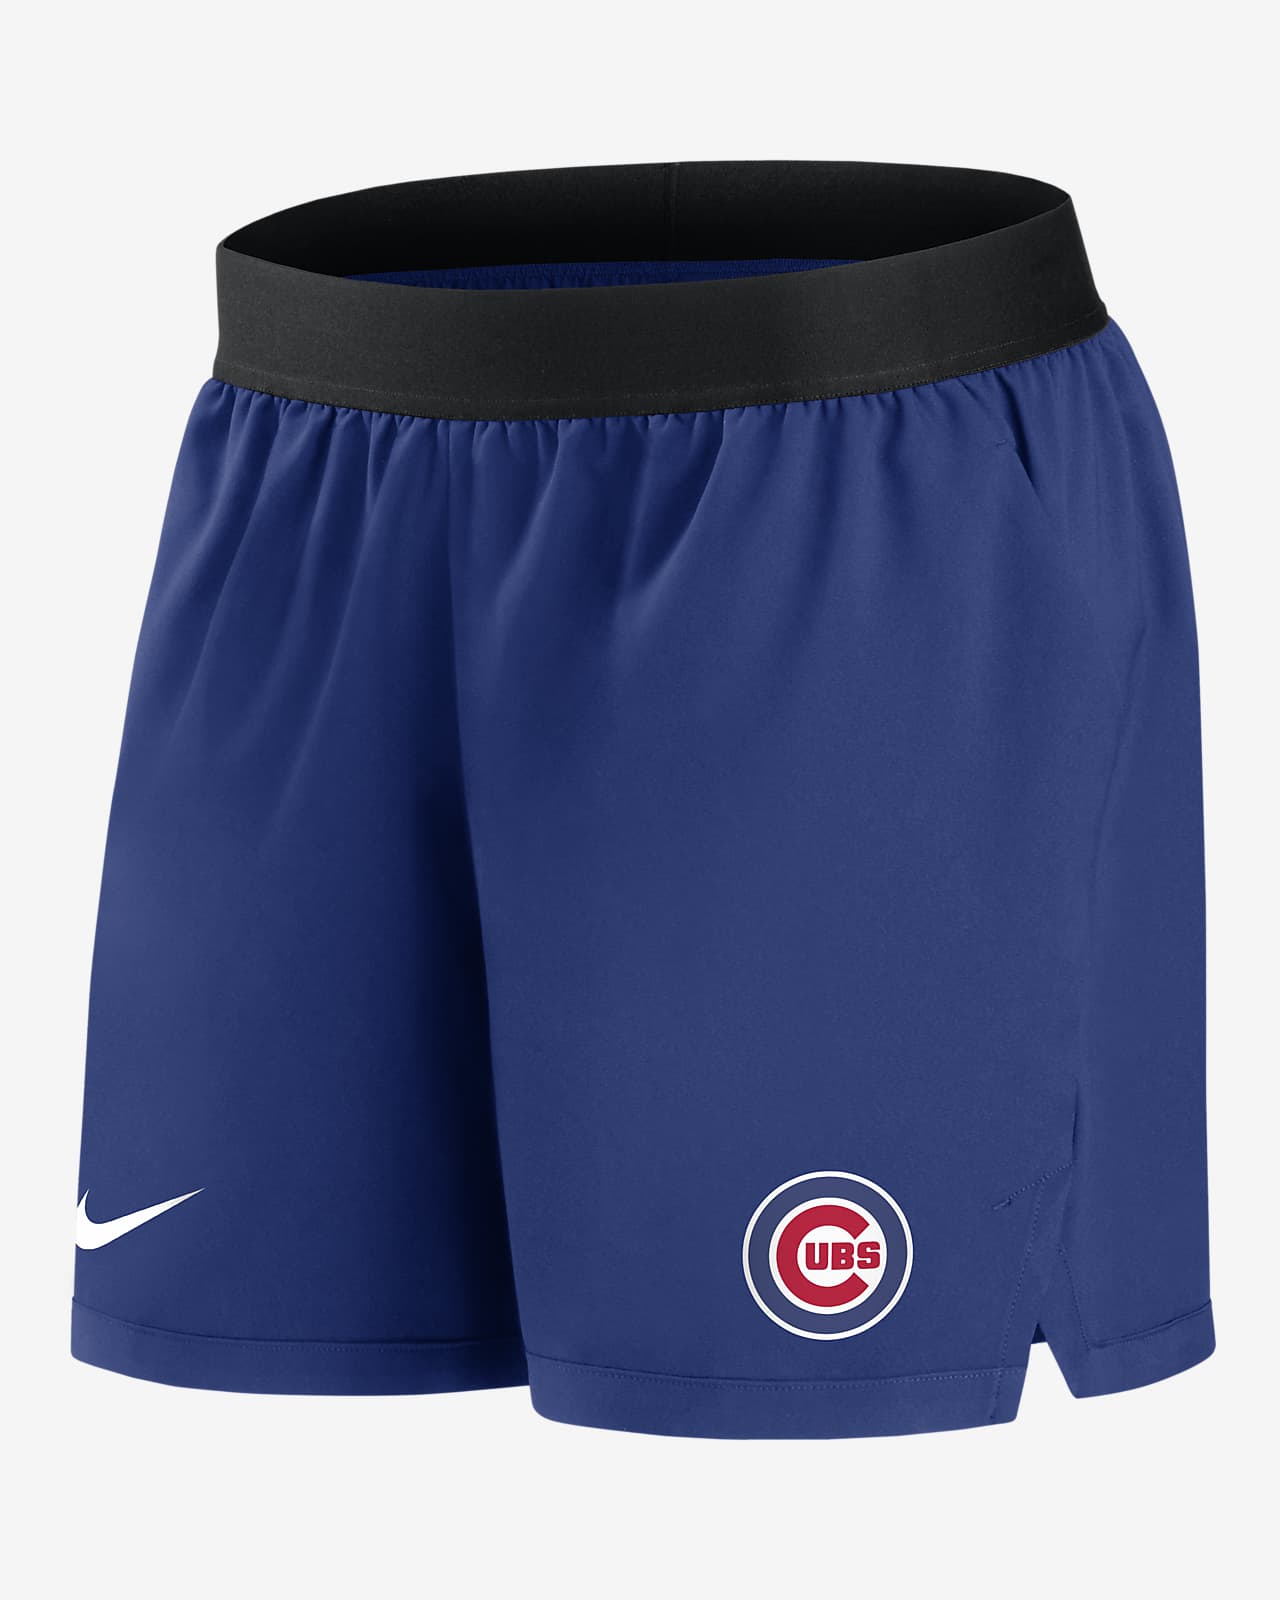 Nike Dri-FIT Team (MLB Chicago Cubs) Women's Shorts